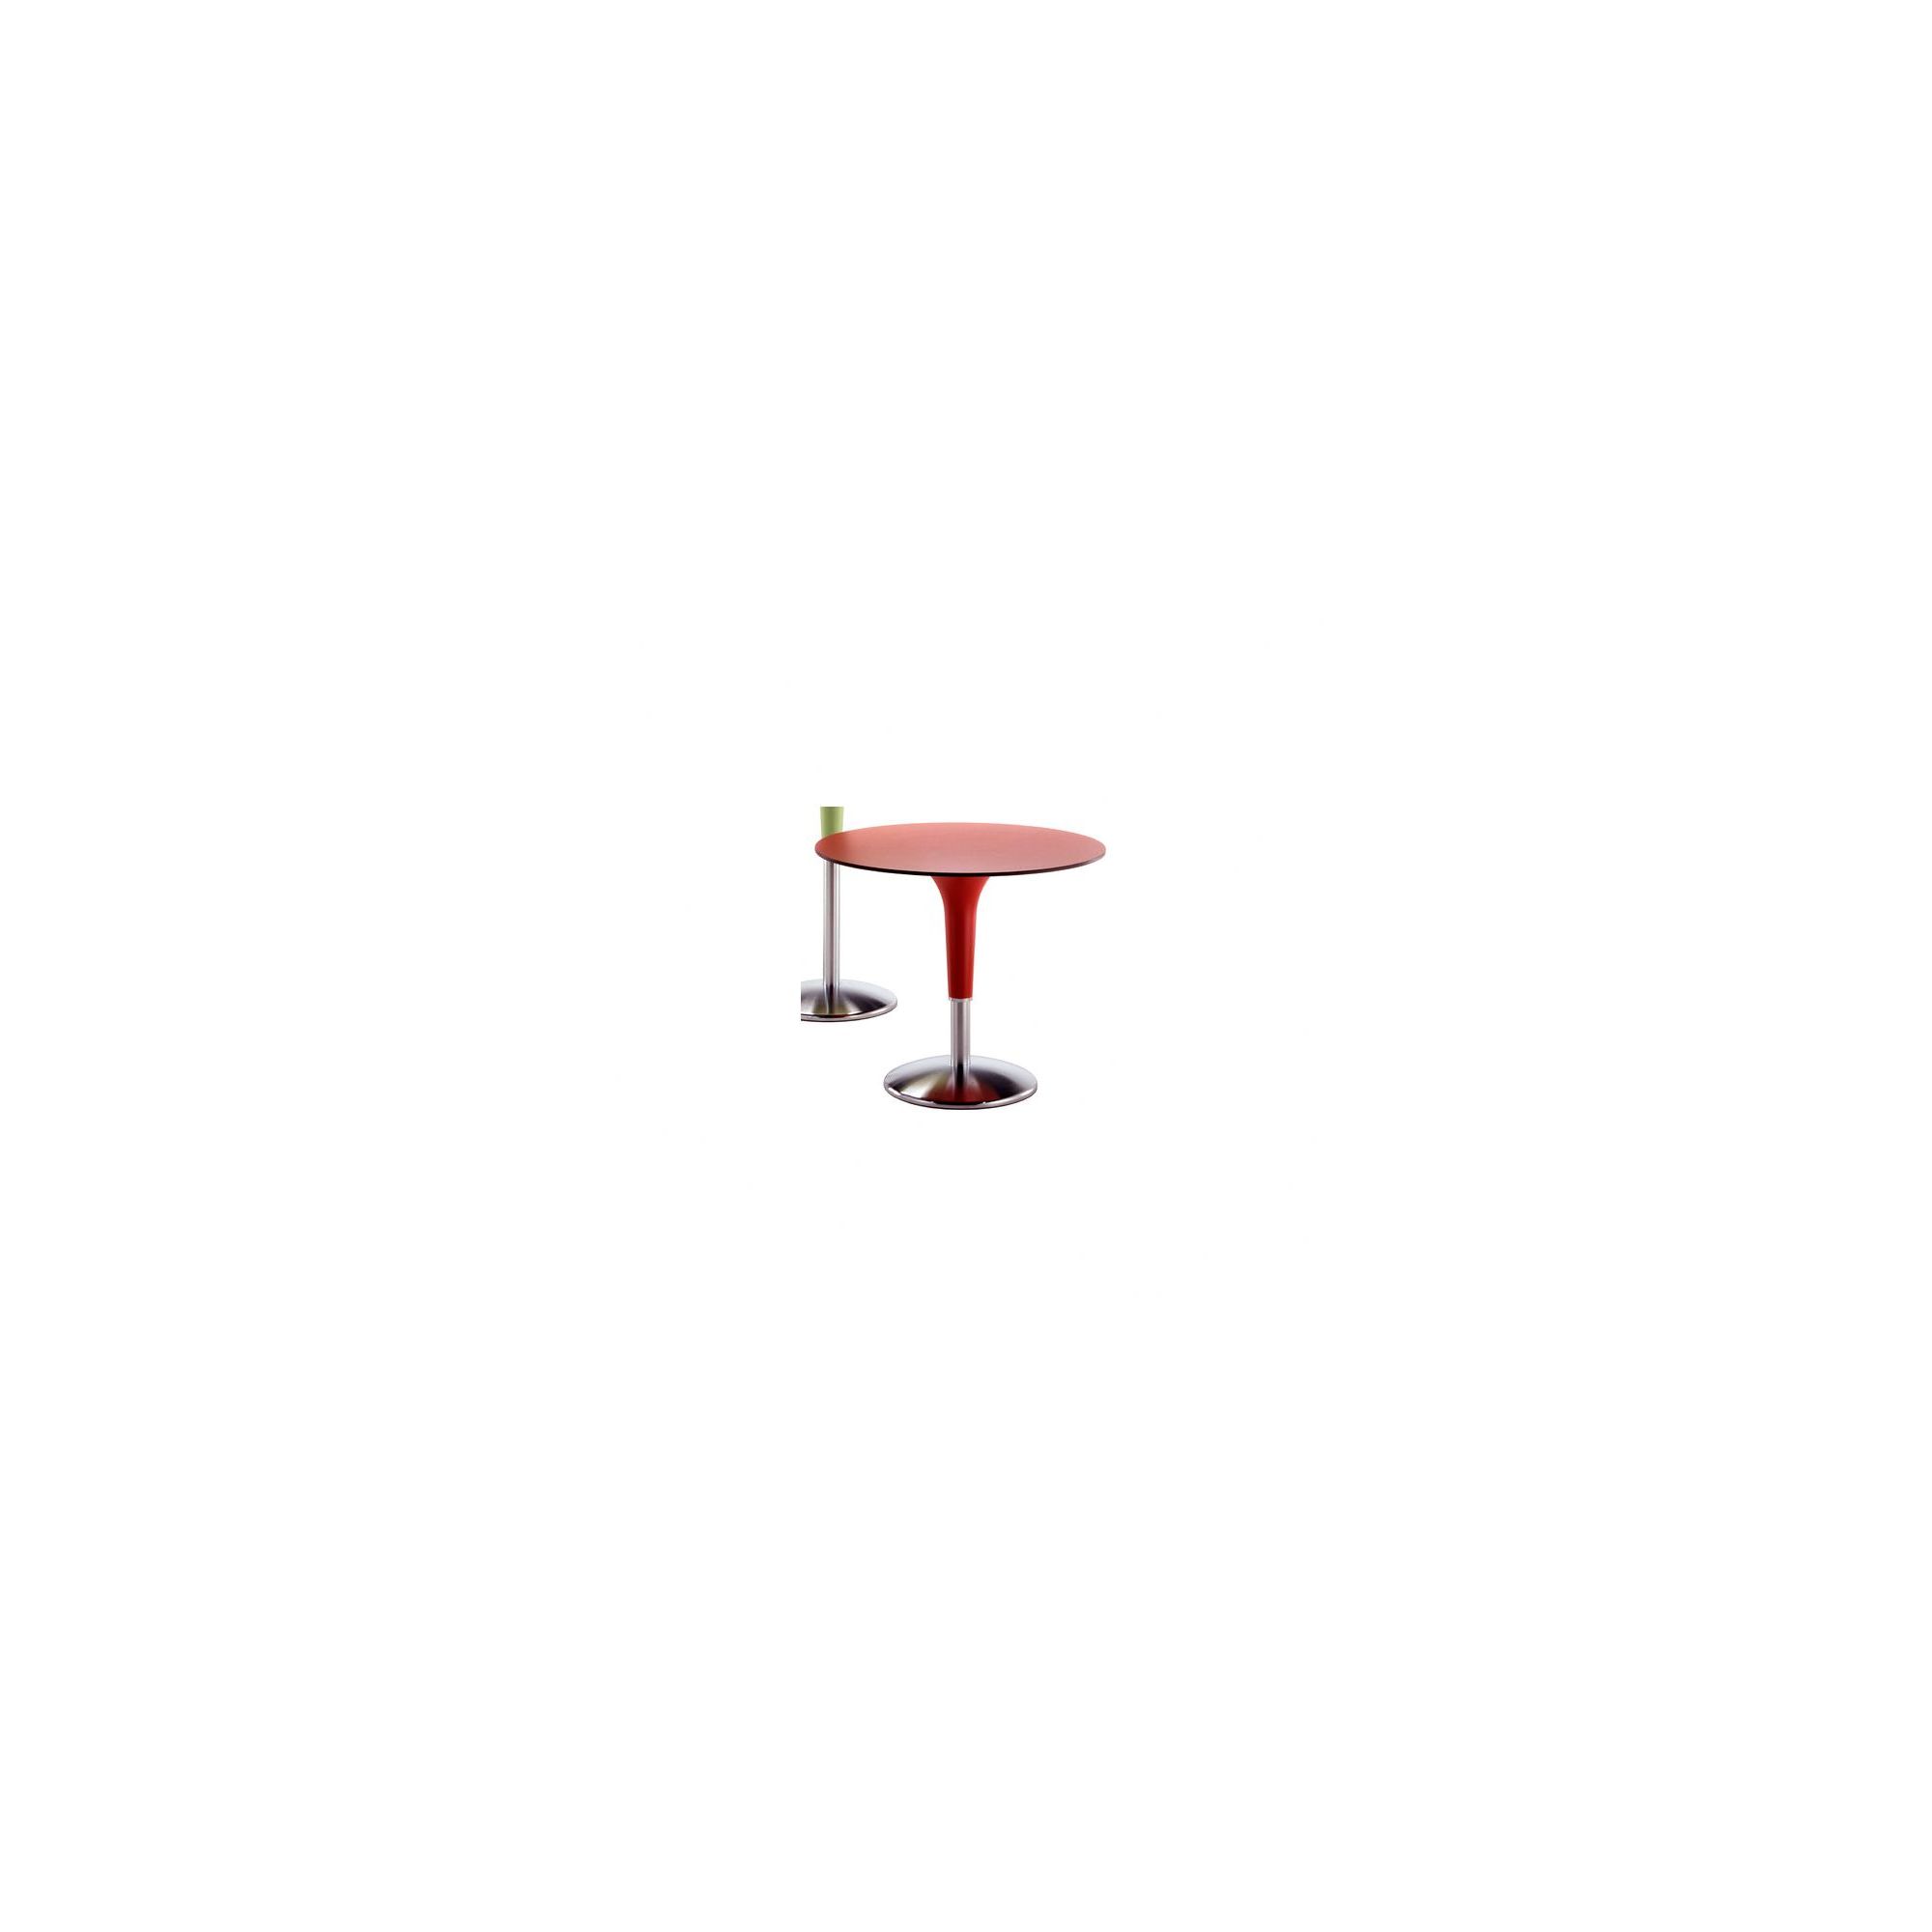 Rexite Zanziplano Round Coffee Table - 60cm x 105cm - Red at Tesco Direct